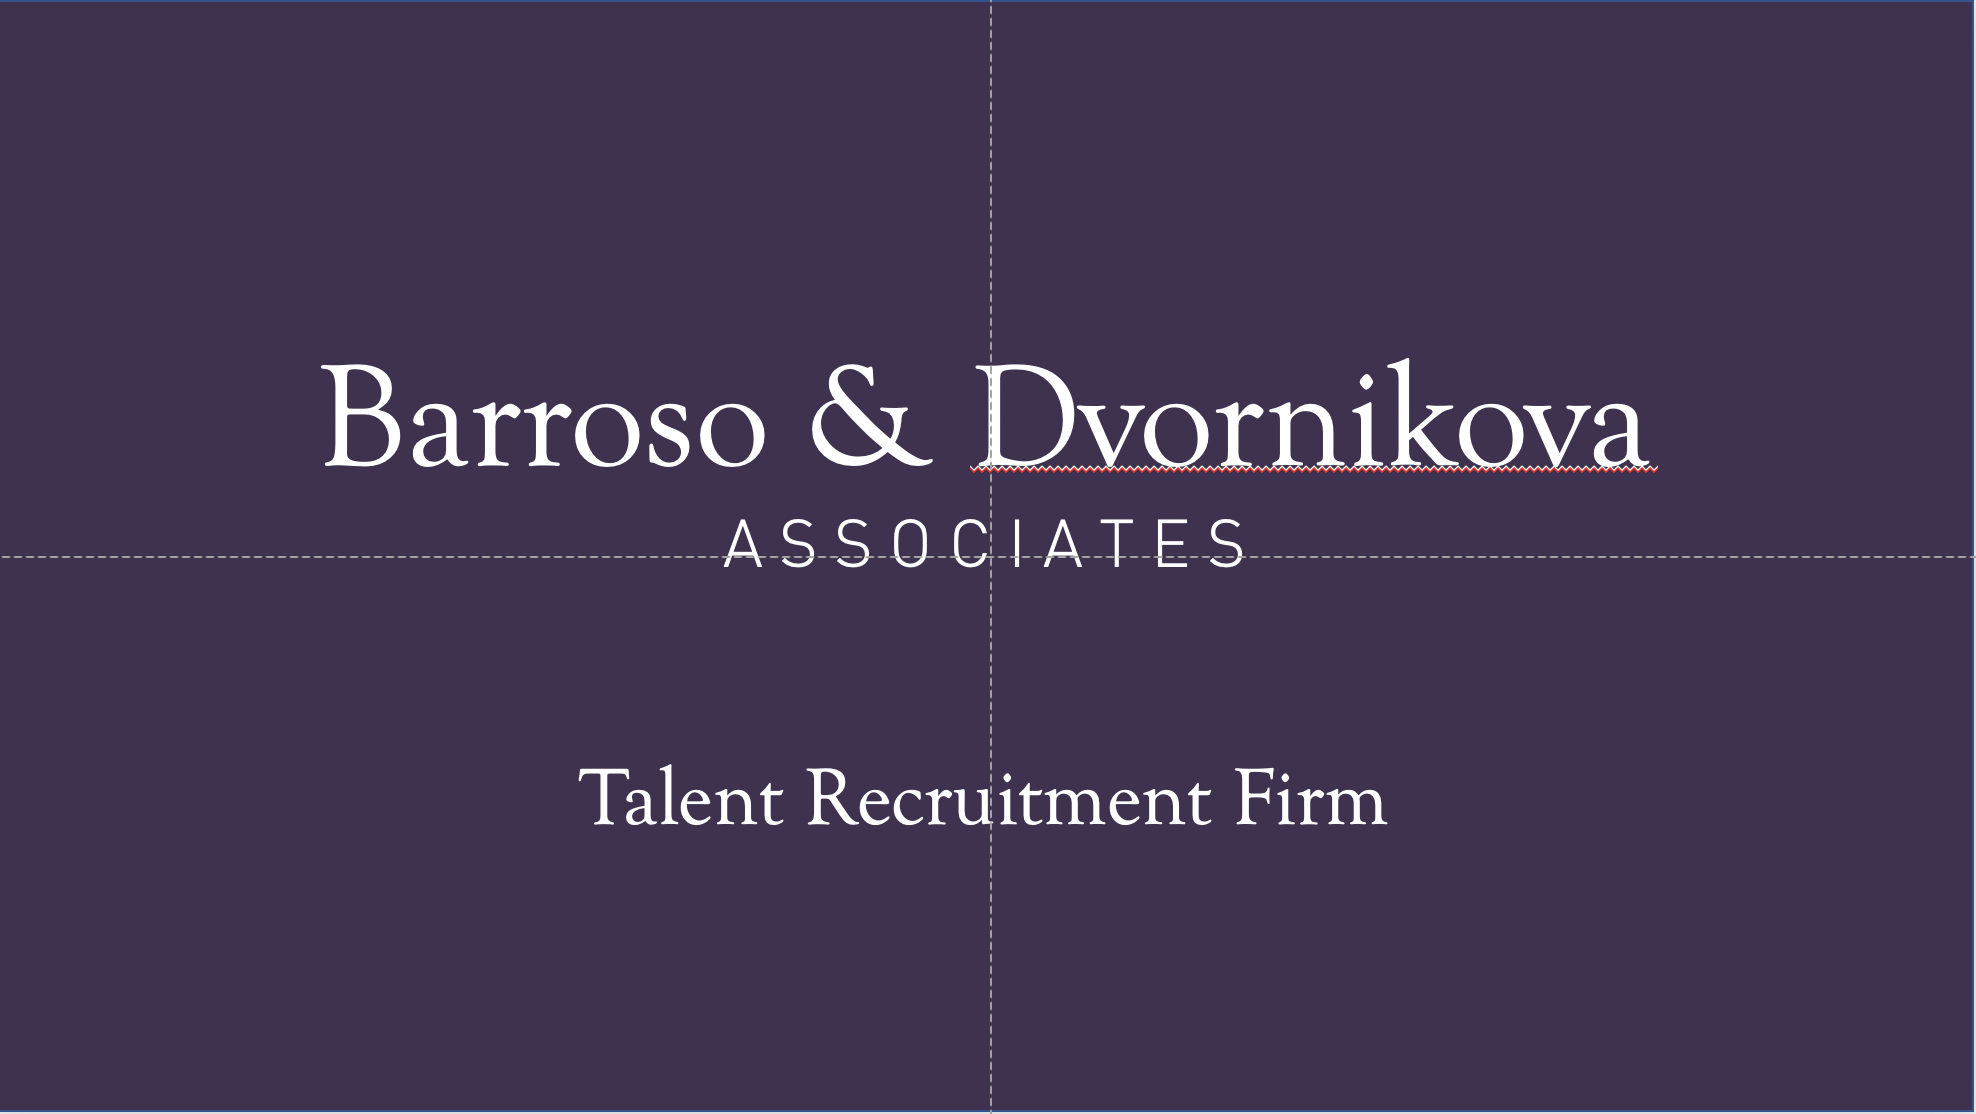 Barroso & Dvornikova Associates